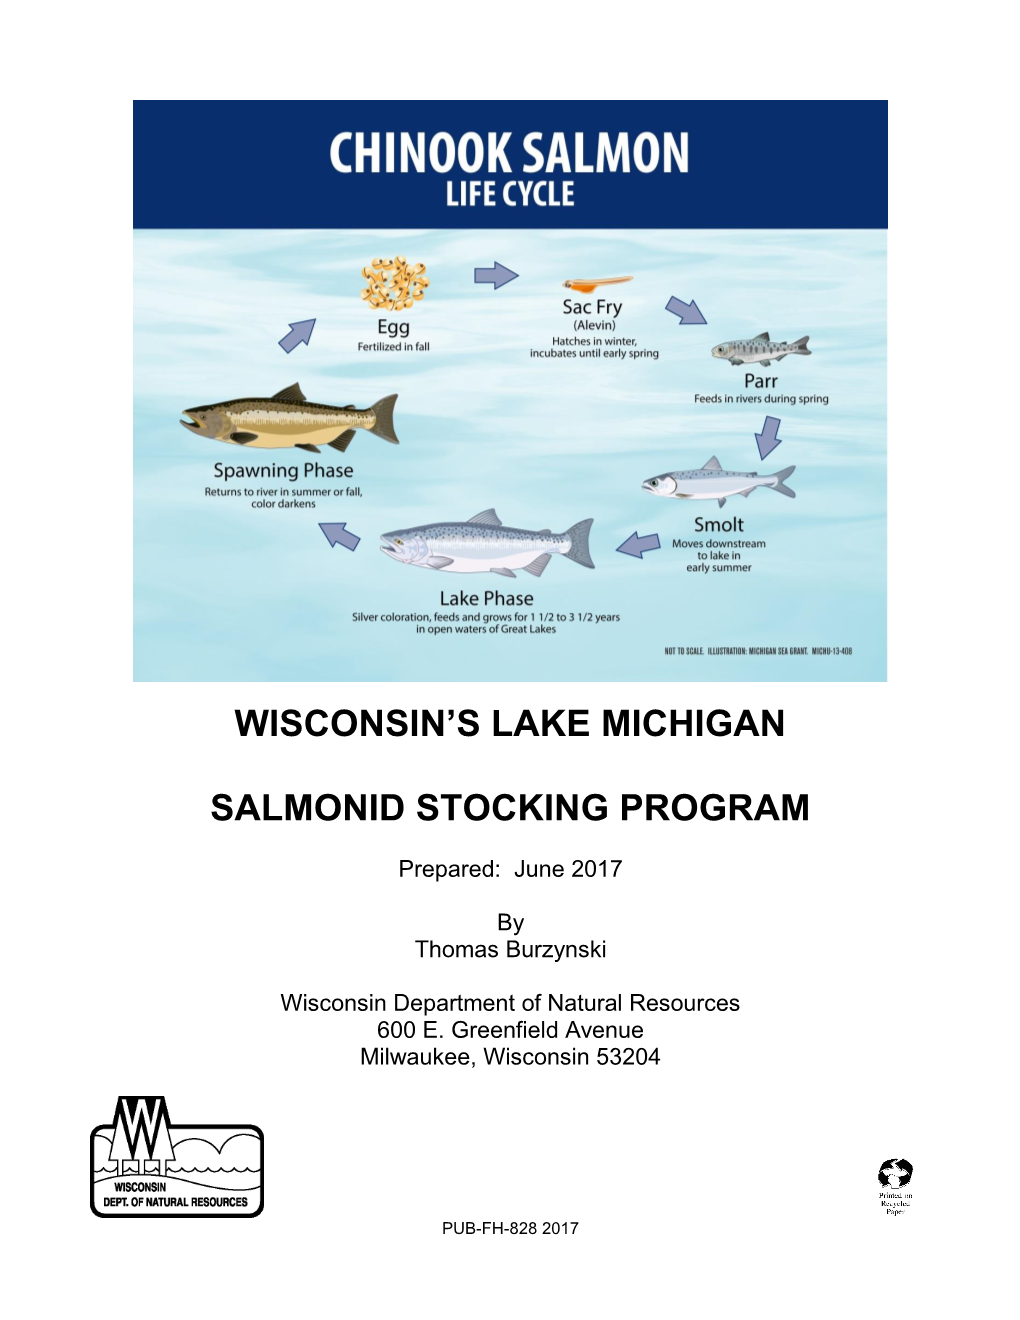 Wisconsin's Lake Michigan Salmonid Stocking Summary